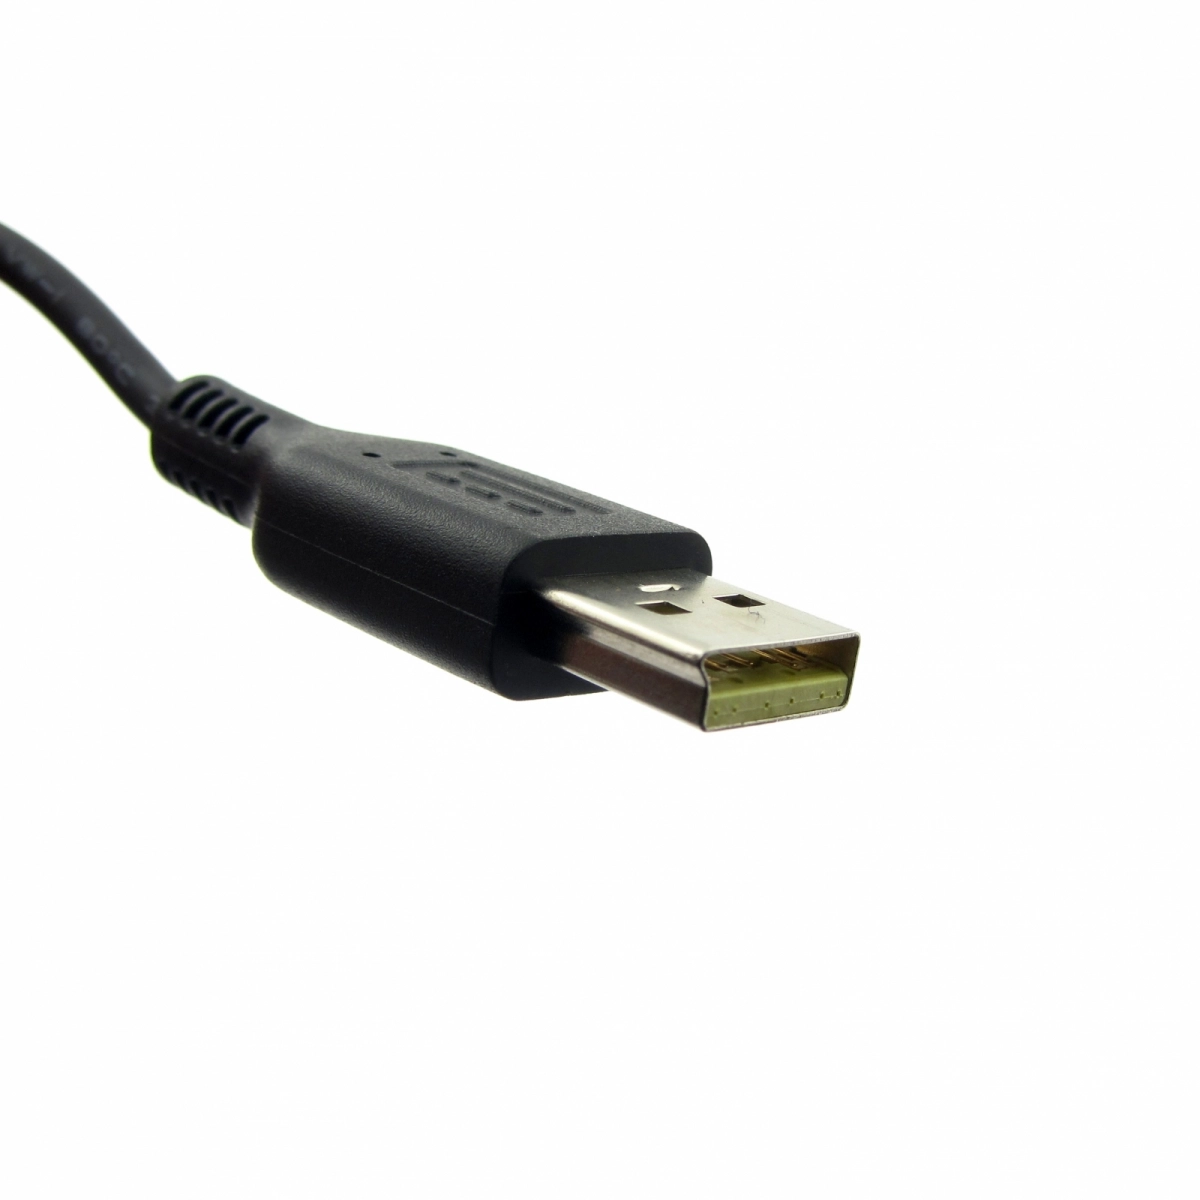 MTXtec Netzteil für LENOVO ADL40WLA, 20/5.2V, 2A, Stecker USB